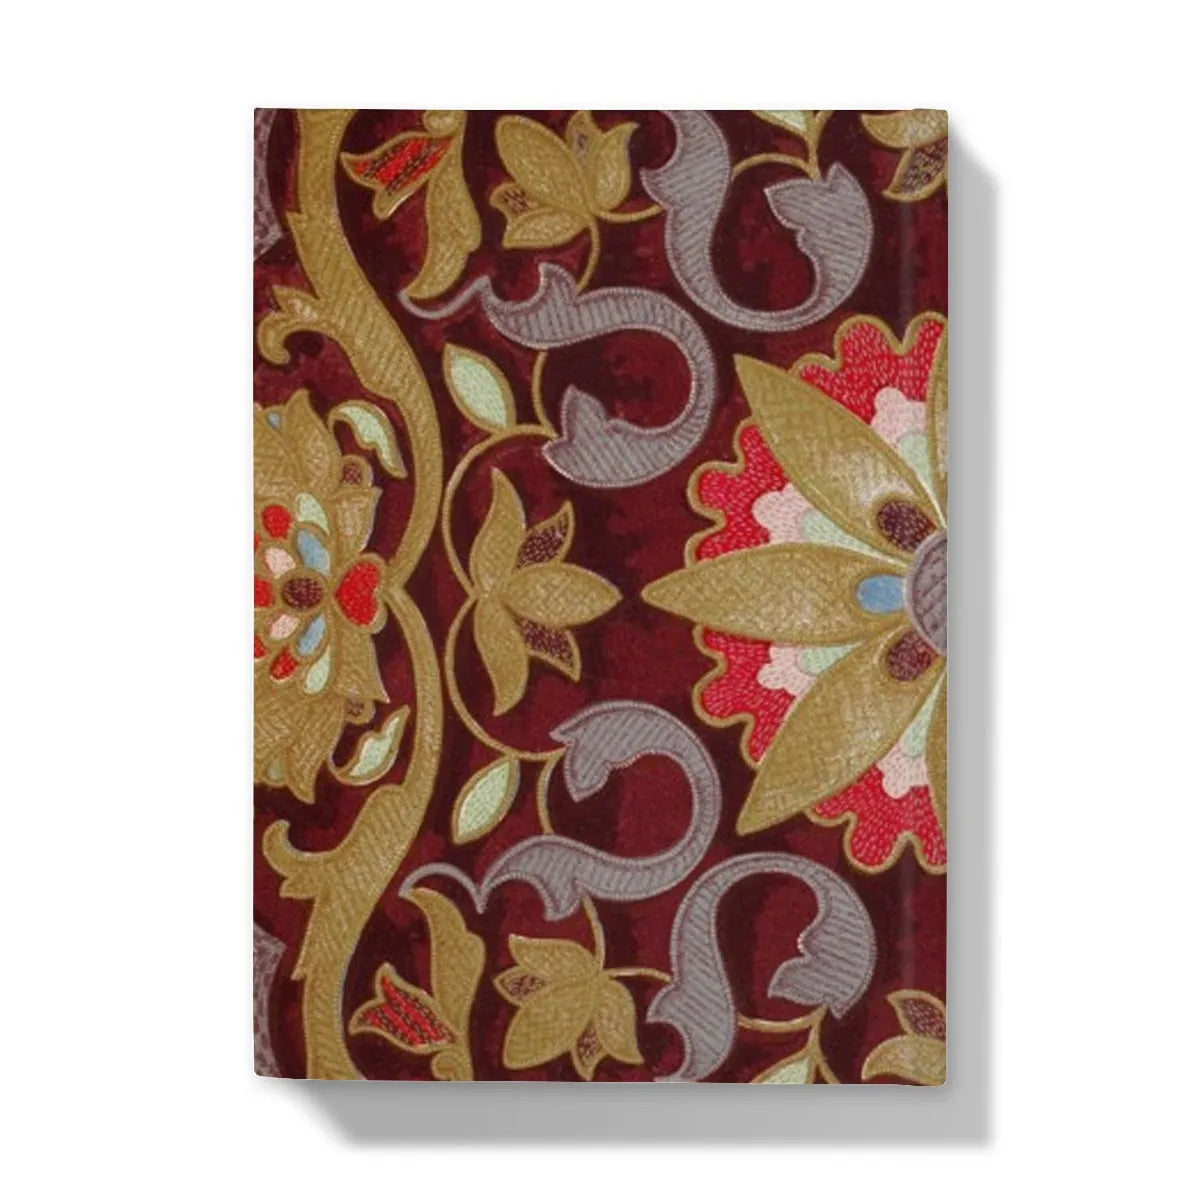 Russian Embroidery Hardback Journal - Notebooks & Notepads - Aesthetic Art